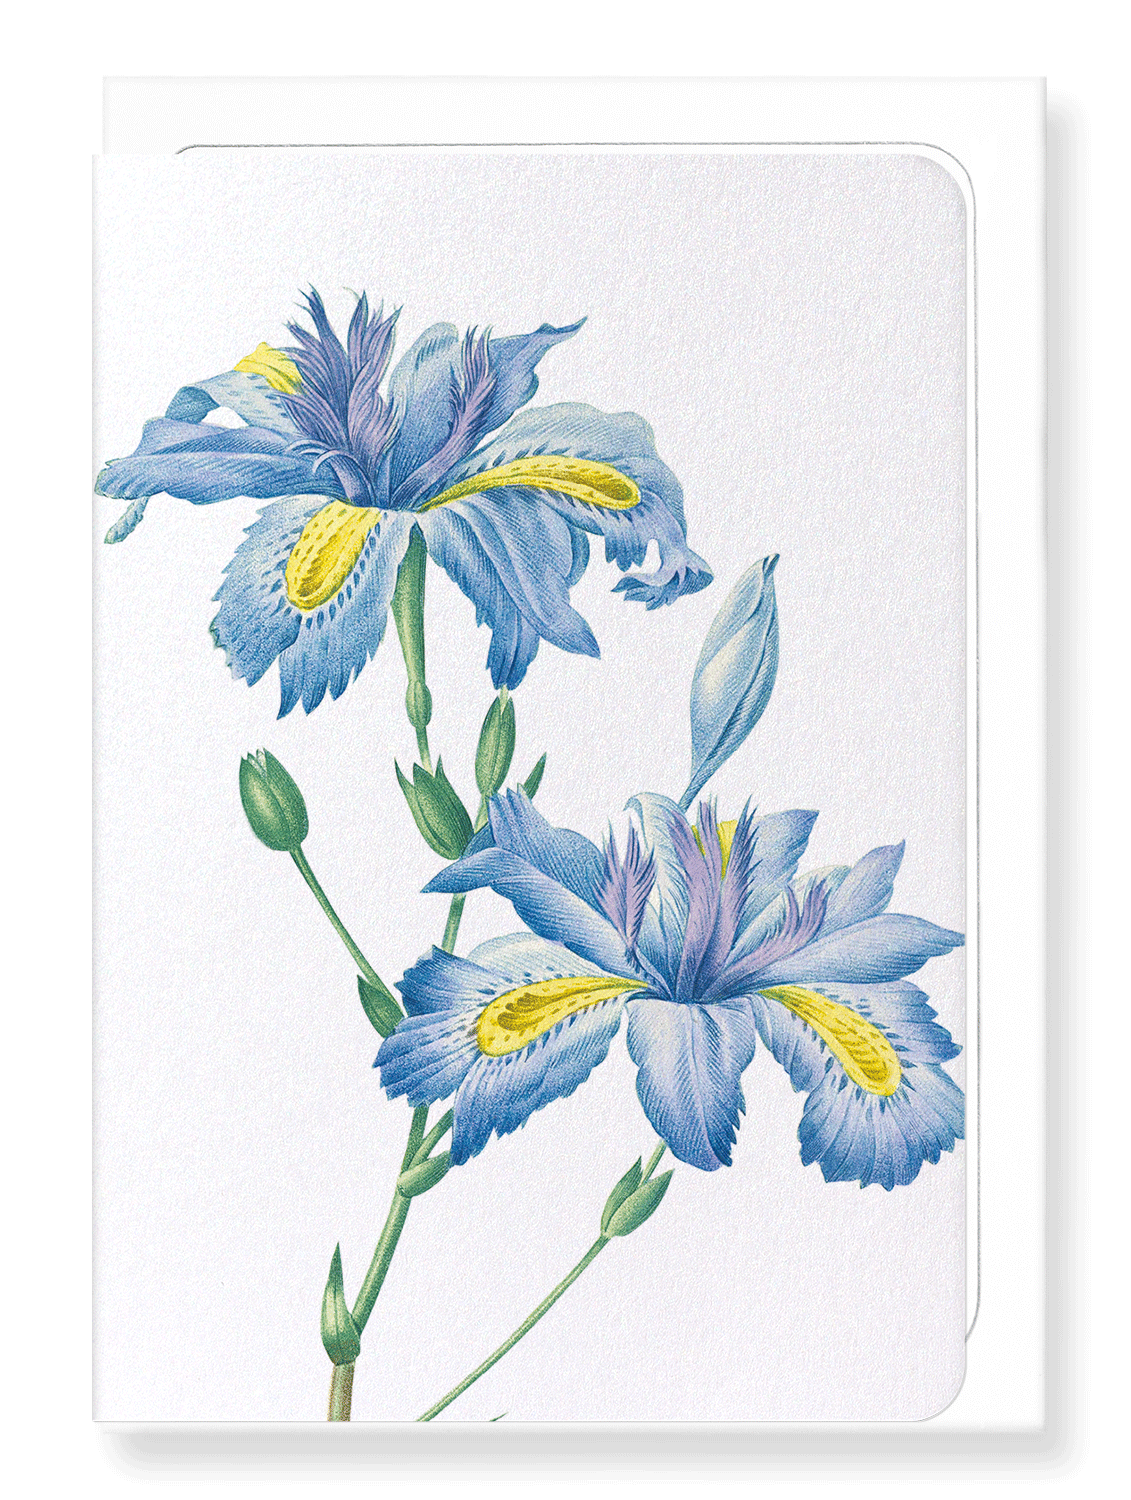 Ezen Designs - Butterfly flower  (detail) - Greeting Card - Front